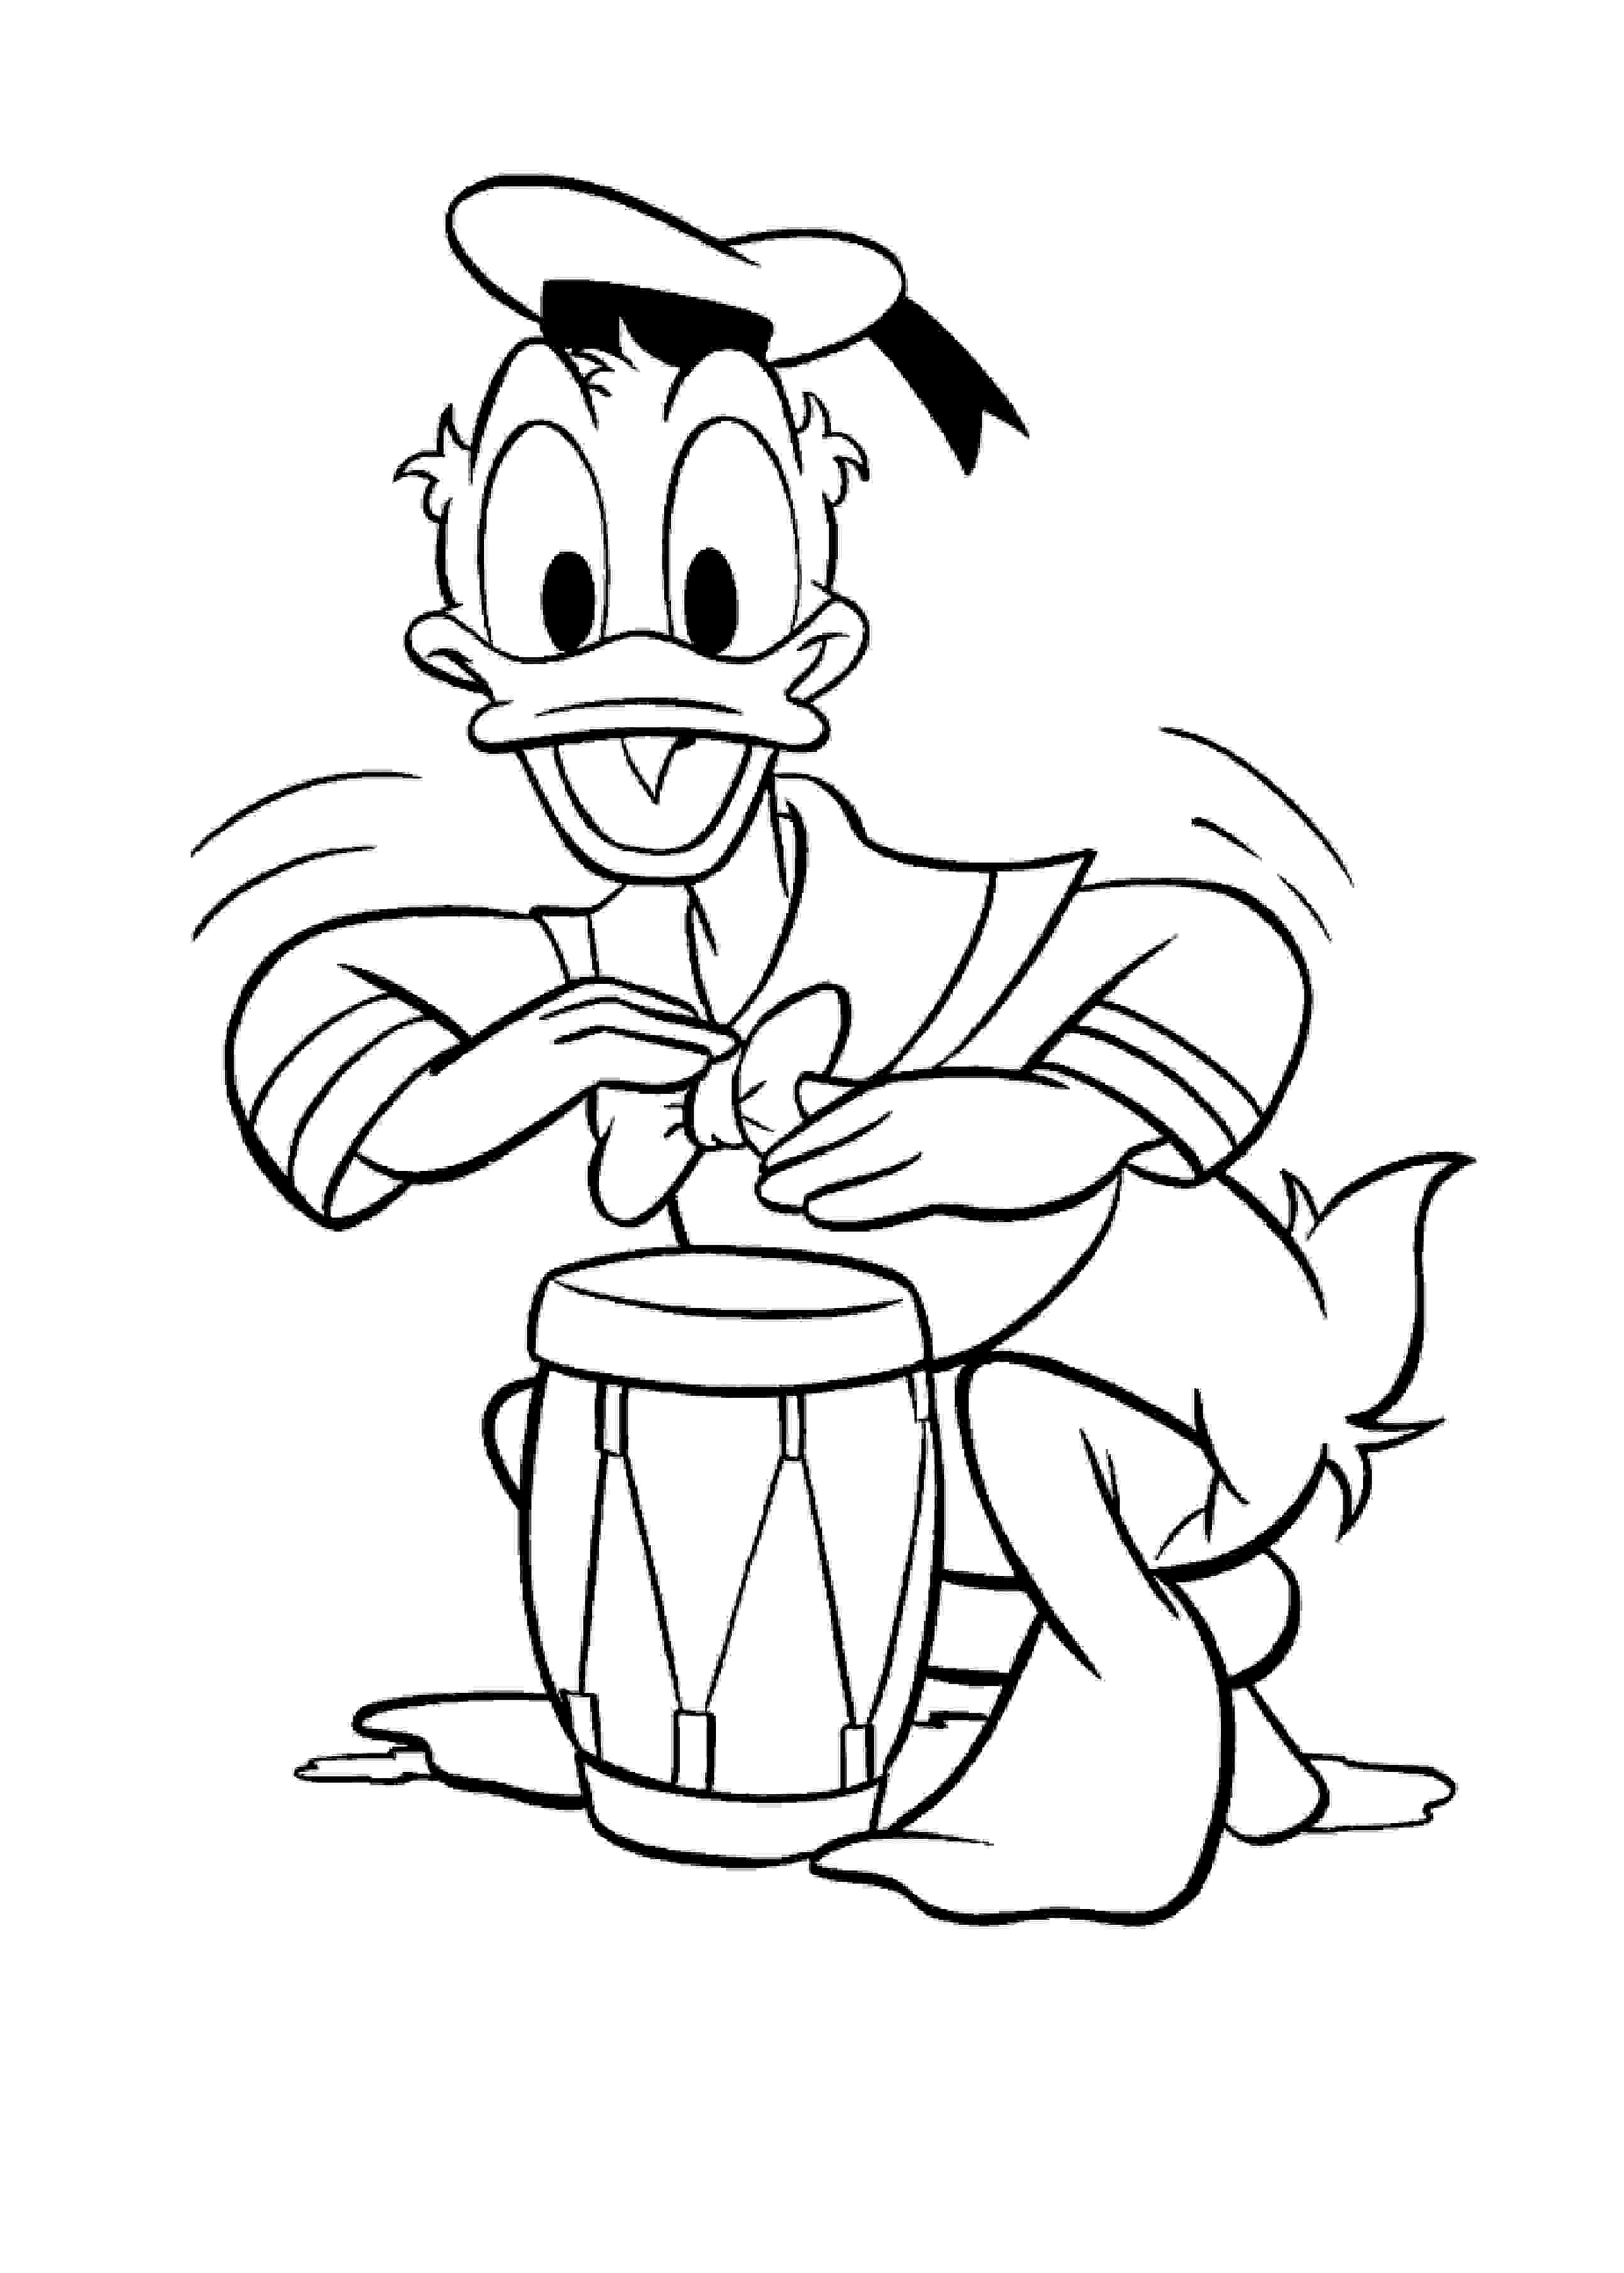 Donald (Disney) joue du tambour